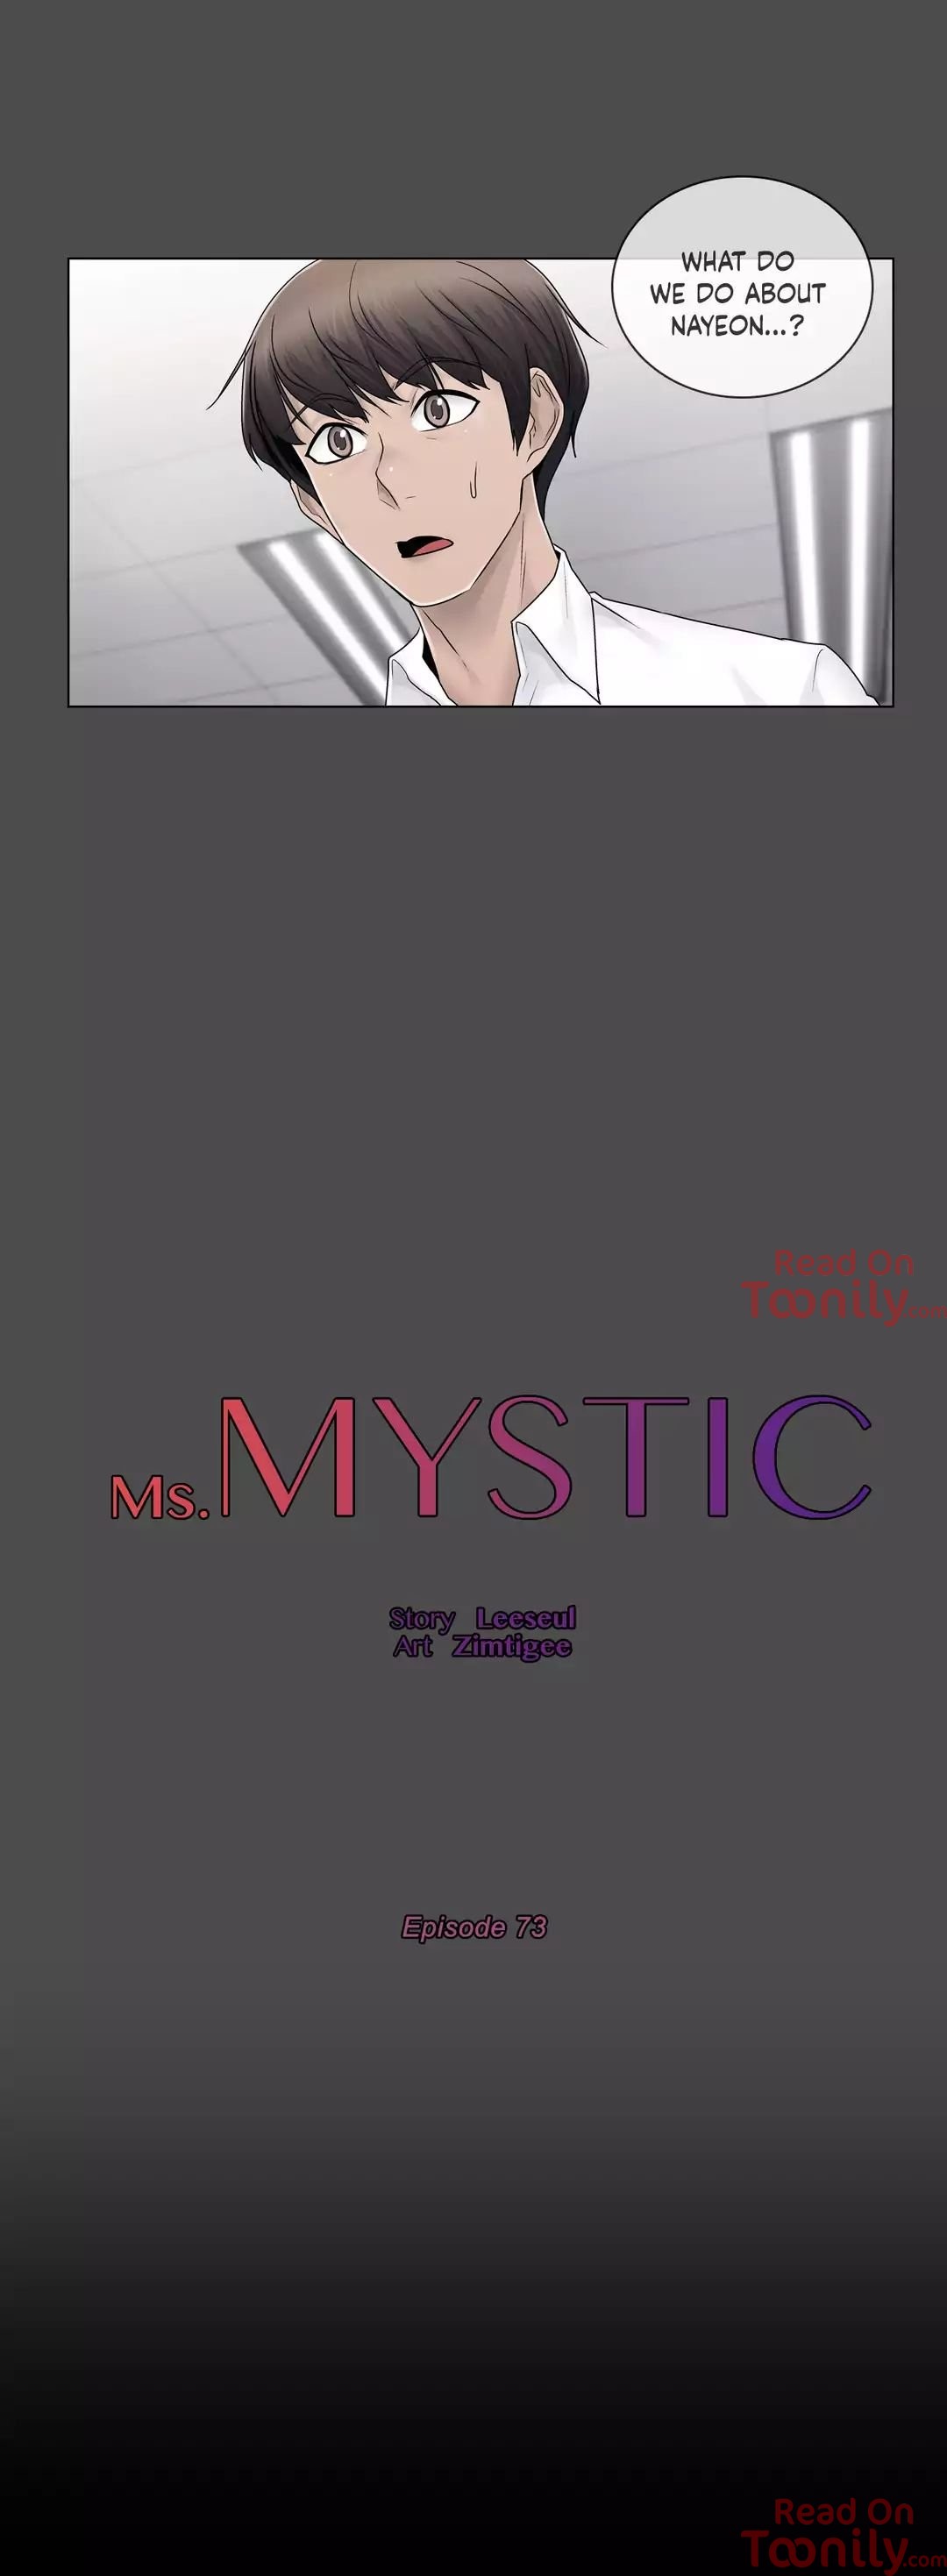 Ms. Mystic image